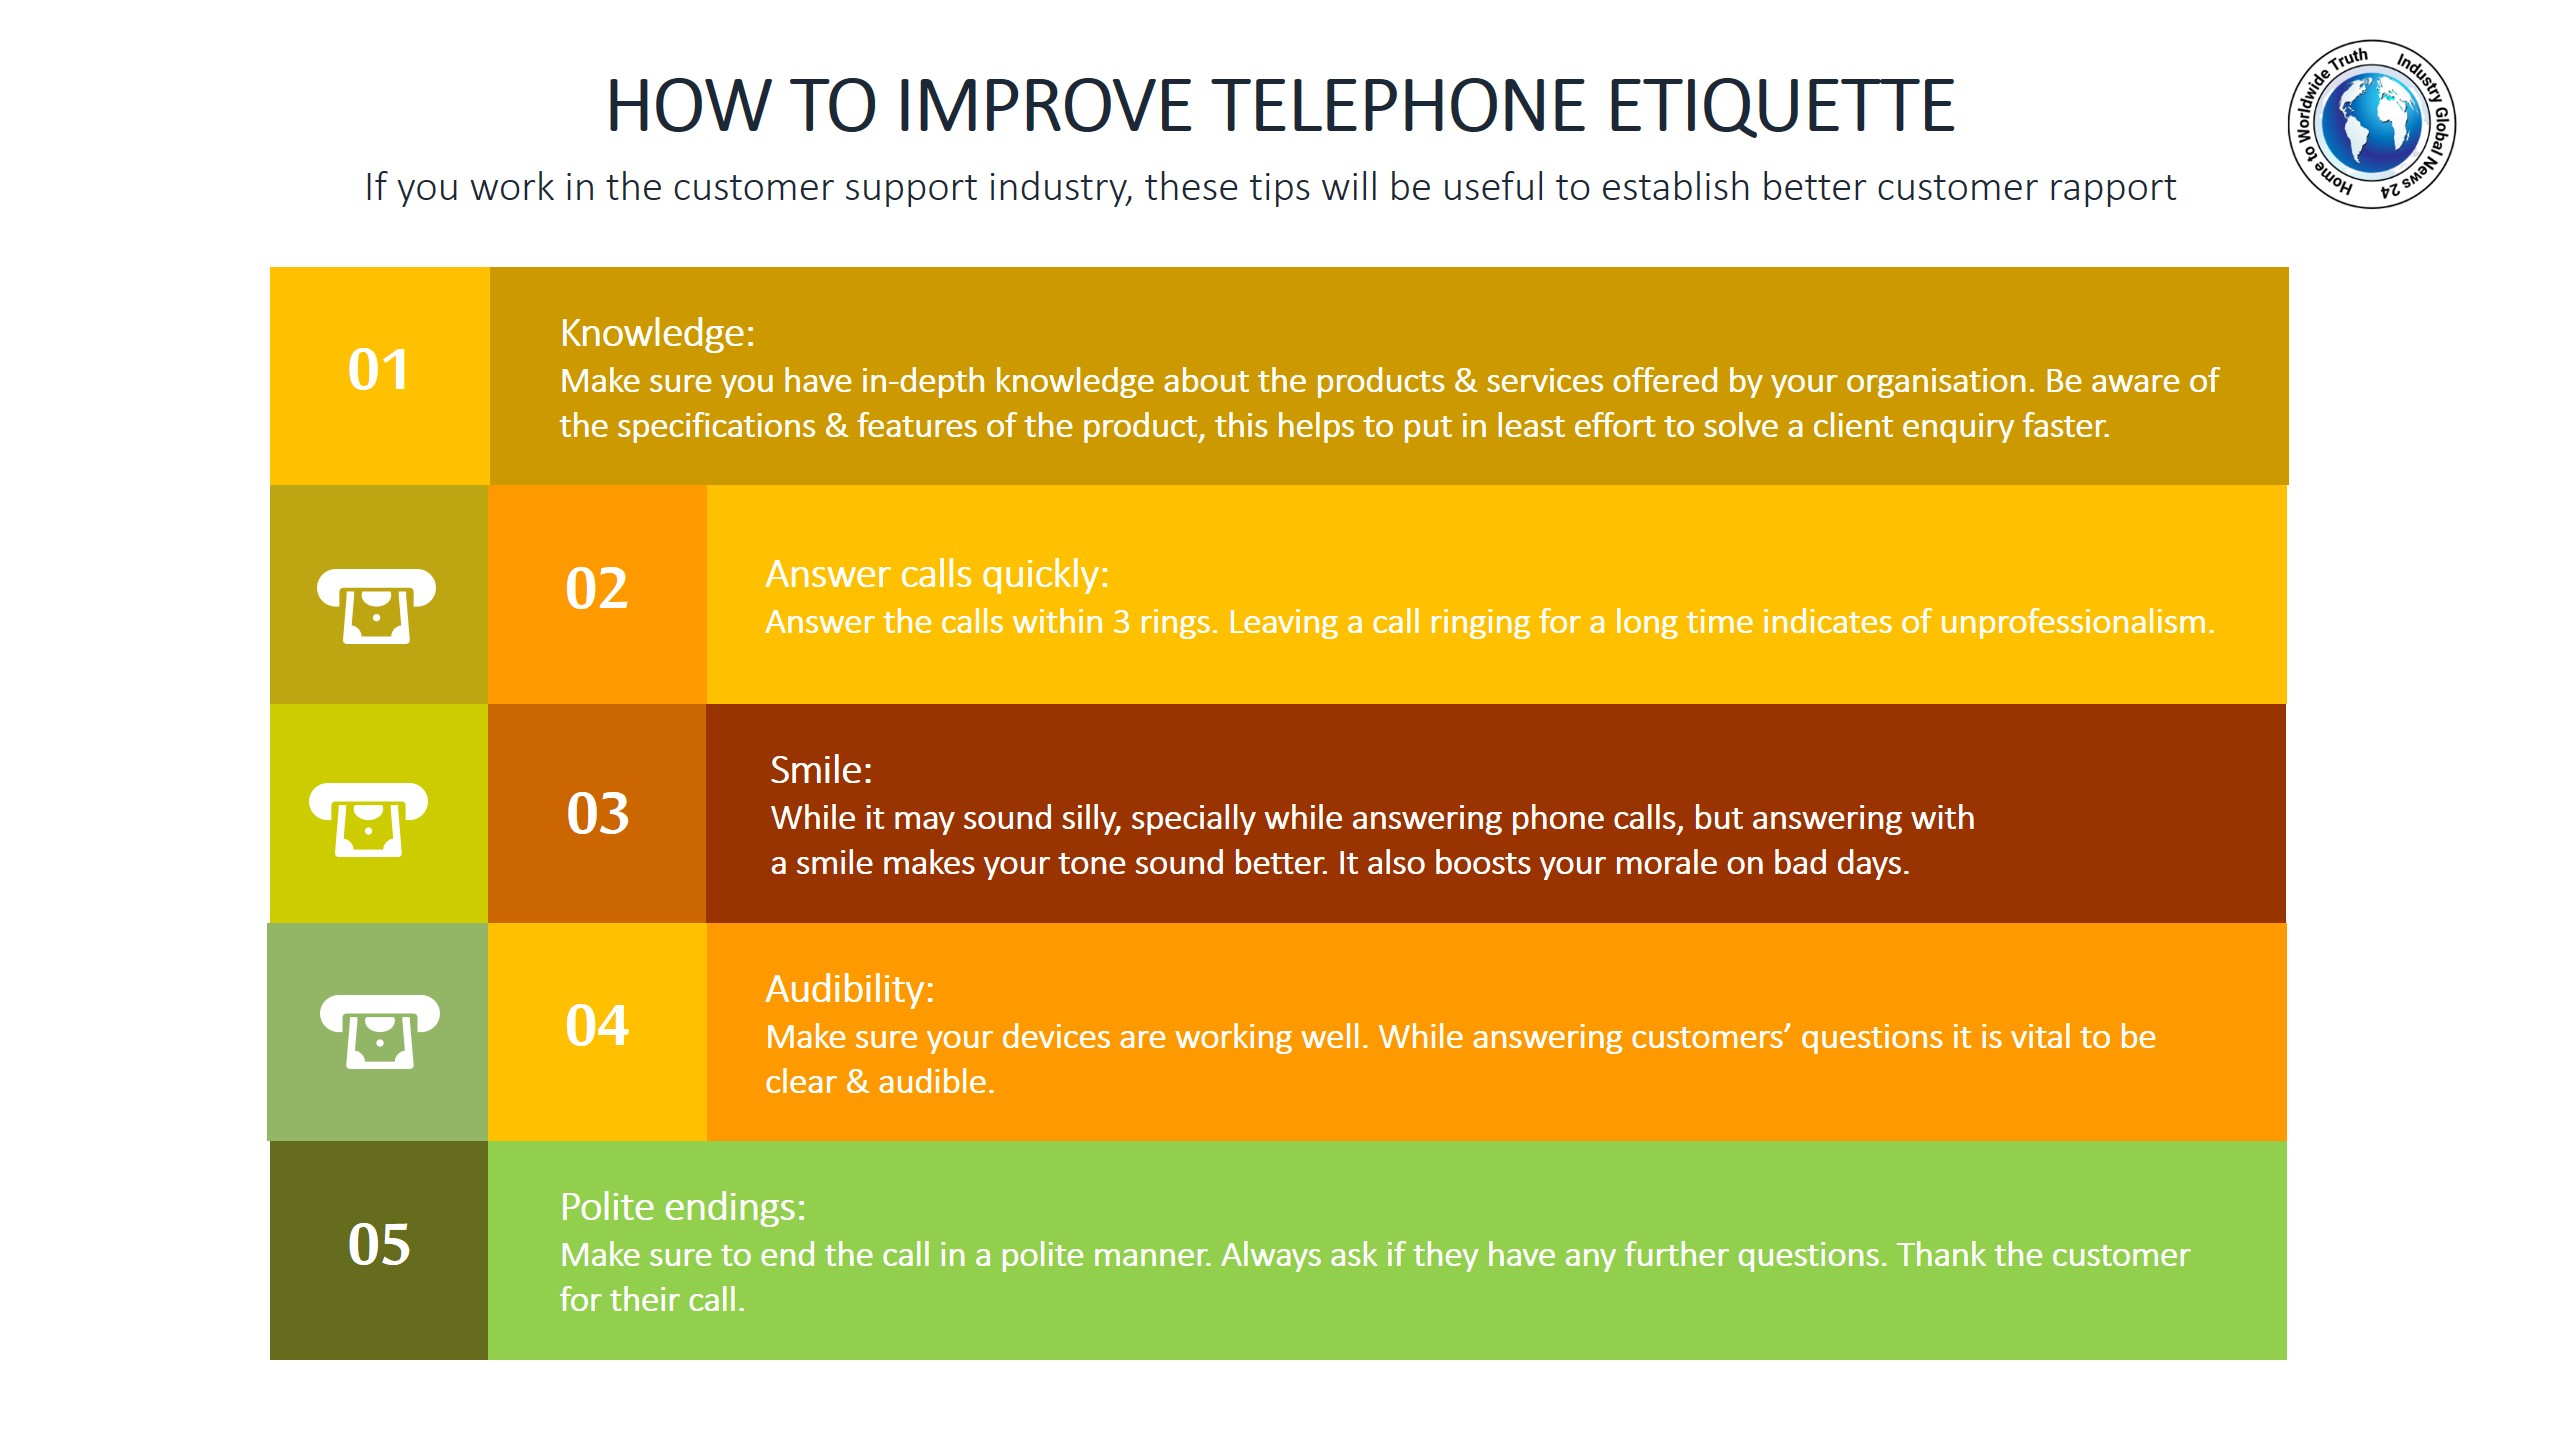 How to improve telephone etiquette